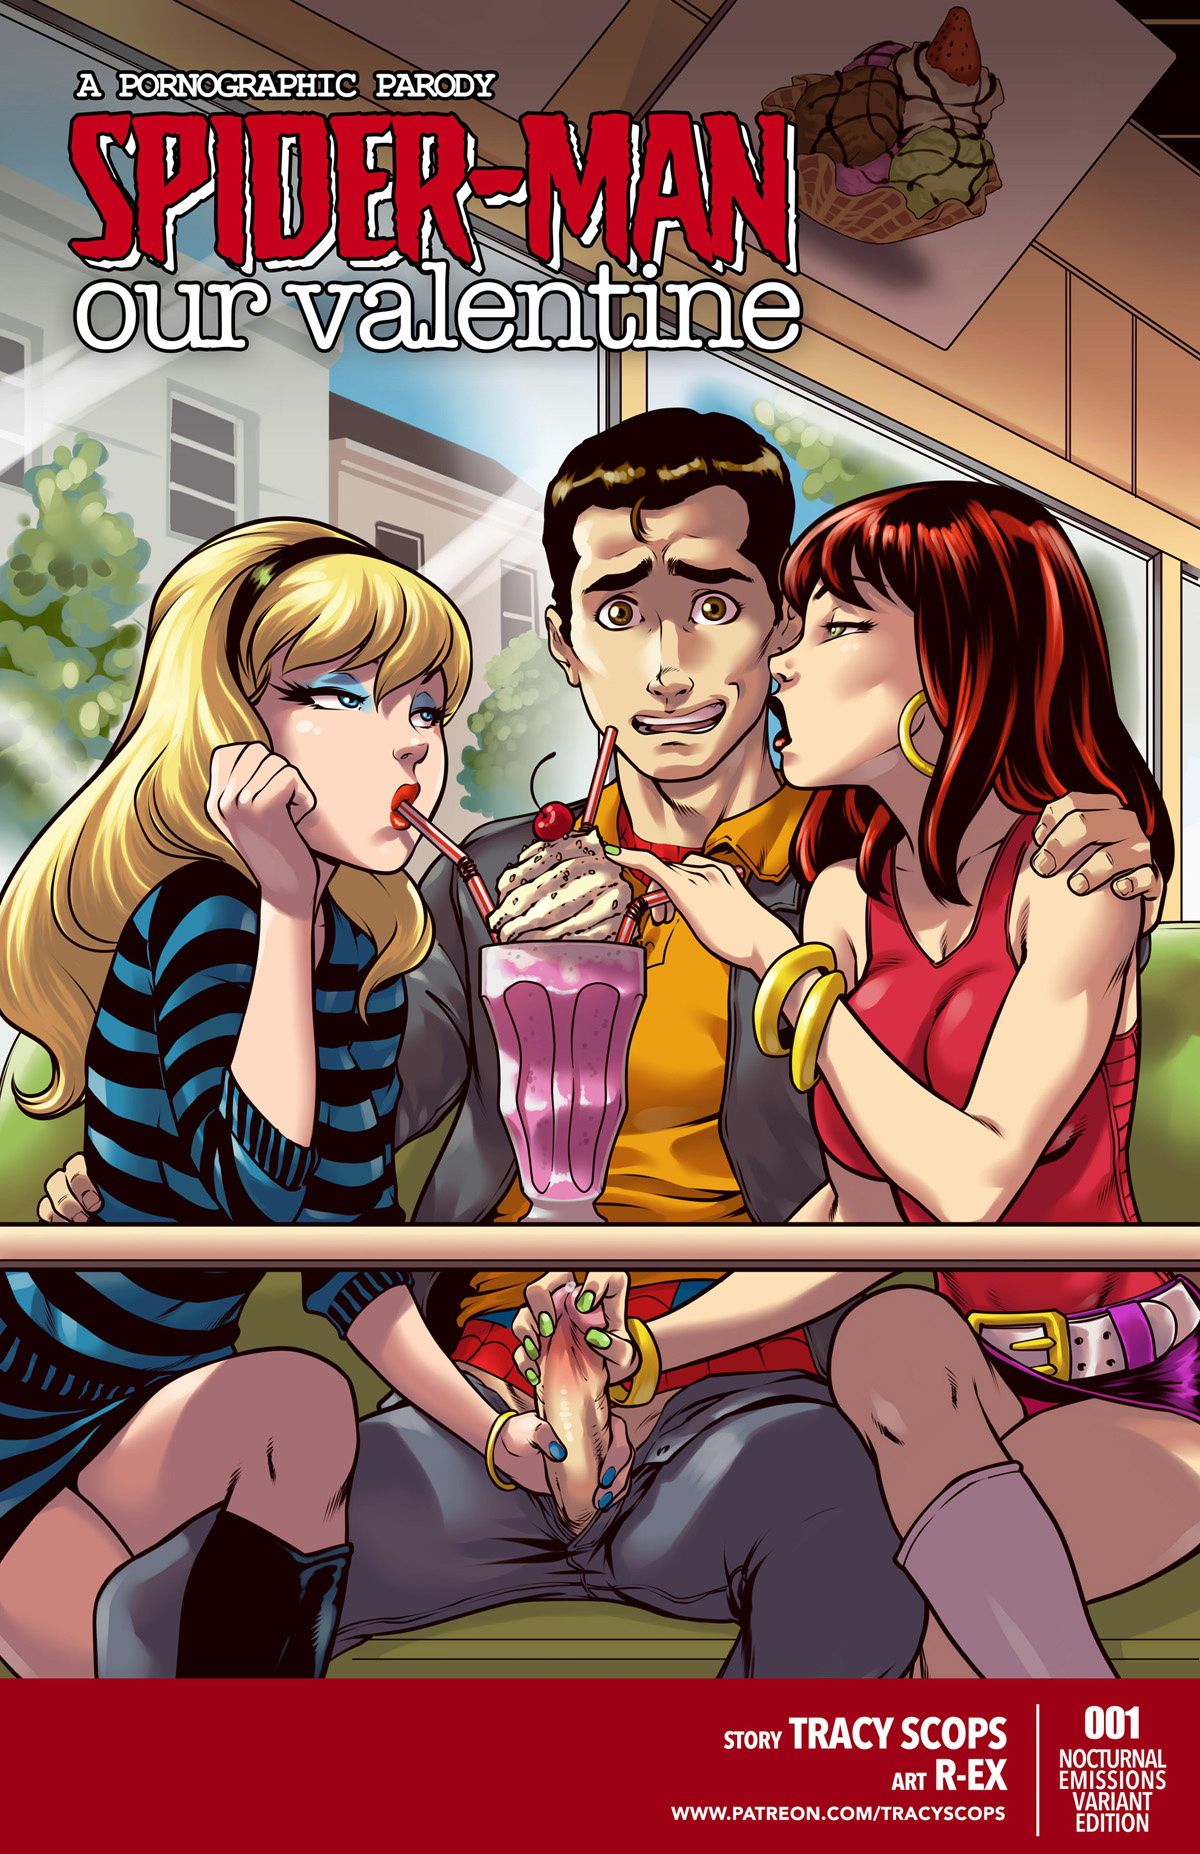 Our Valentine (Spider-Man) [Tracy Scops] Porn Comic - AllPornComic